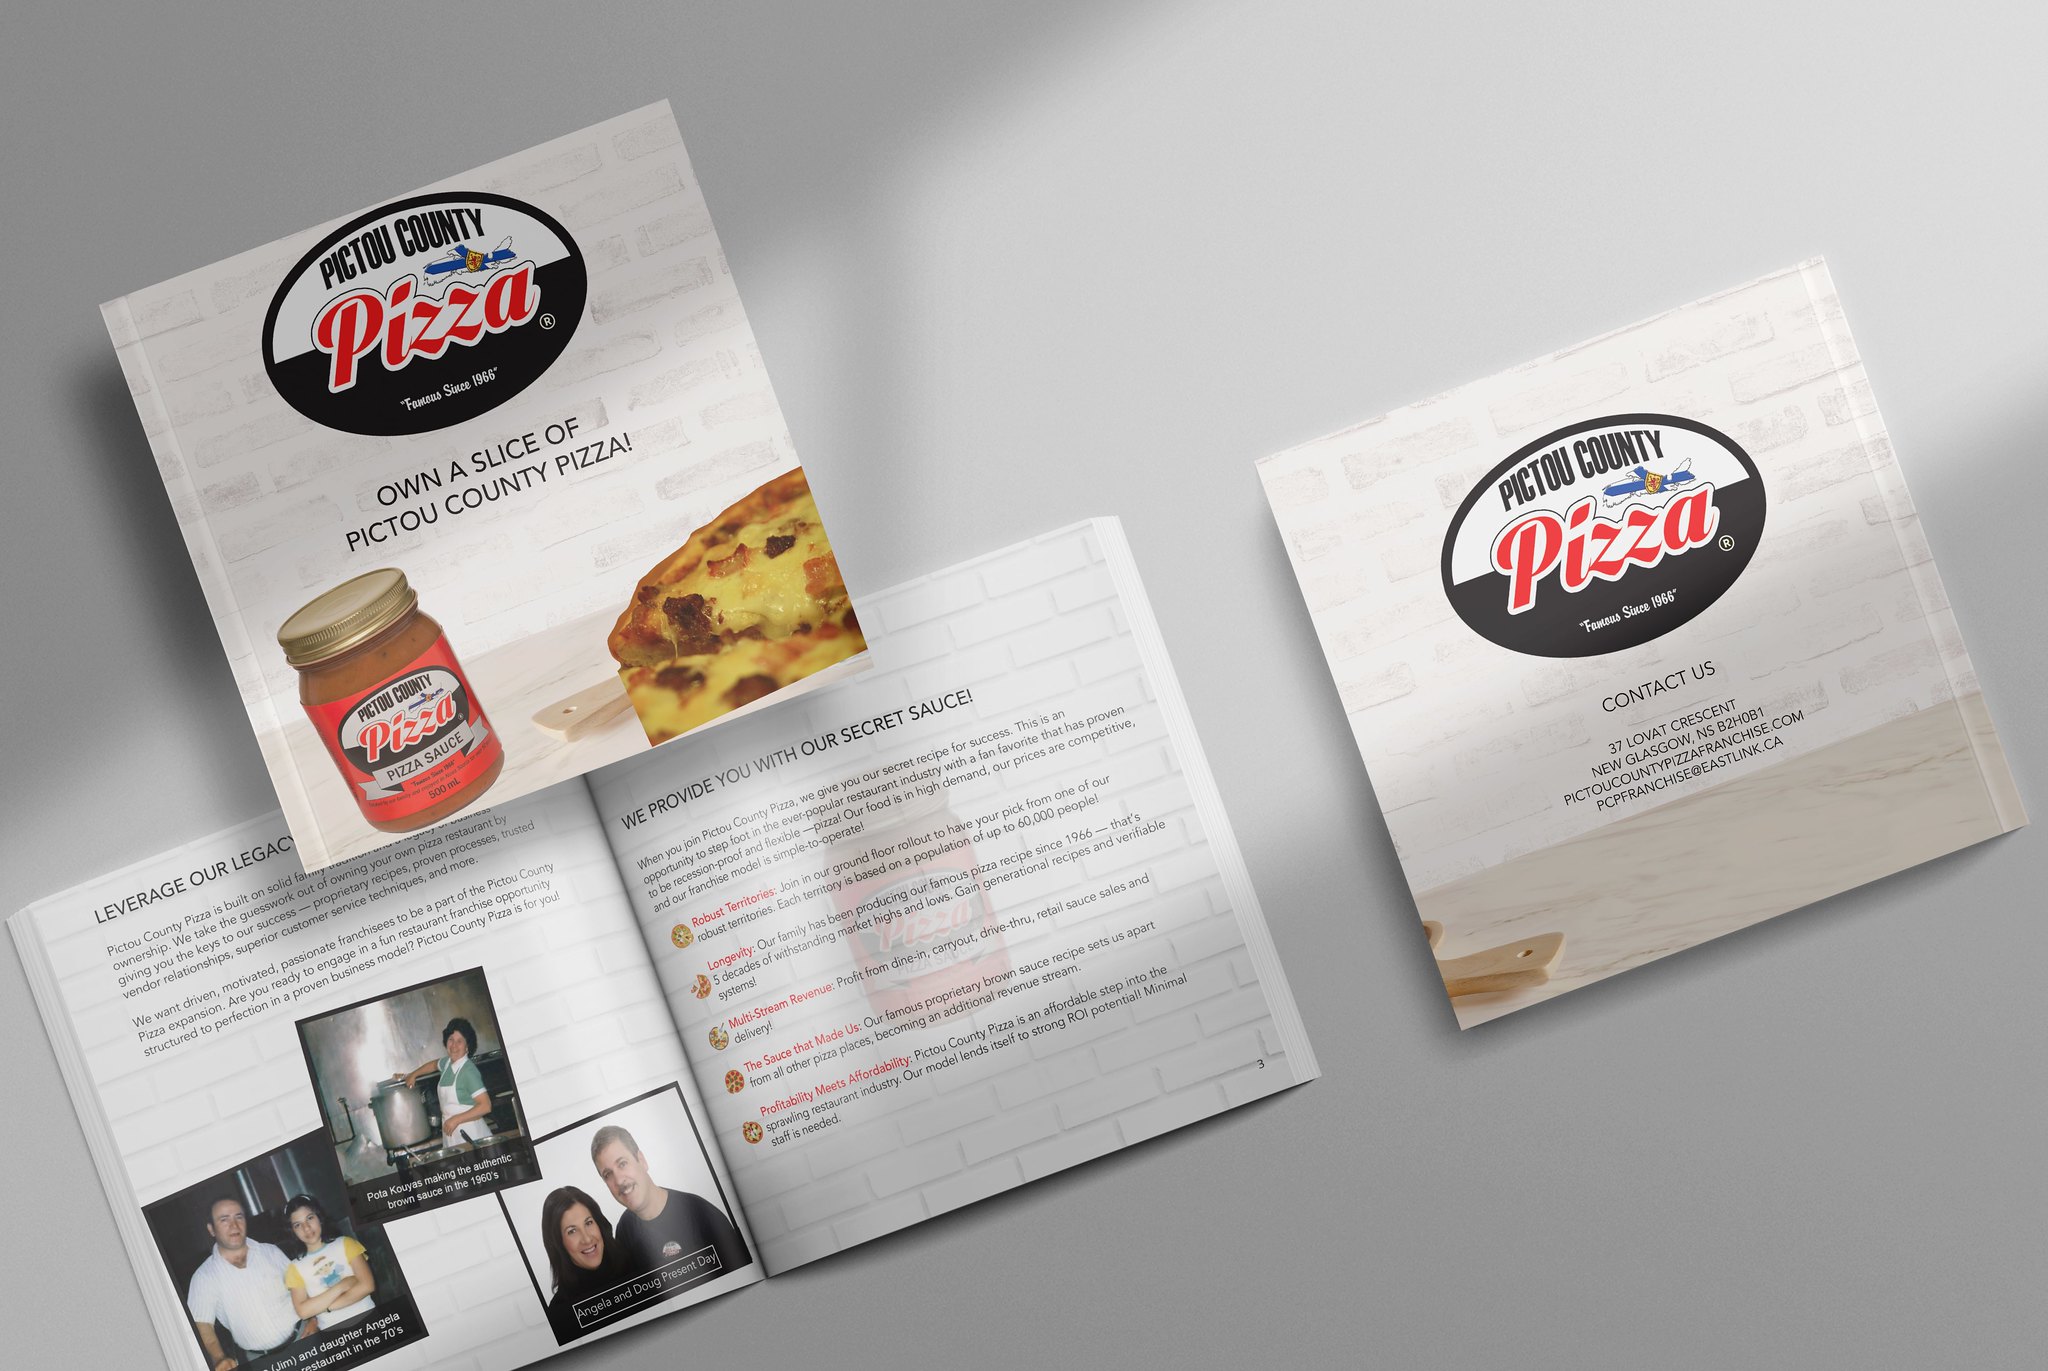 Pictou County Pizza Bifold Brochure Design Broken Rice Media LLC Tuyen Chau